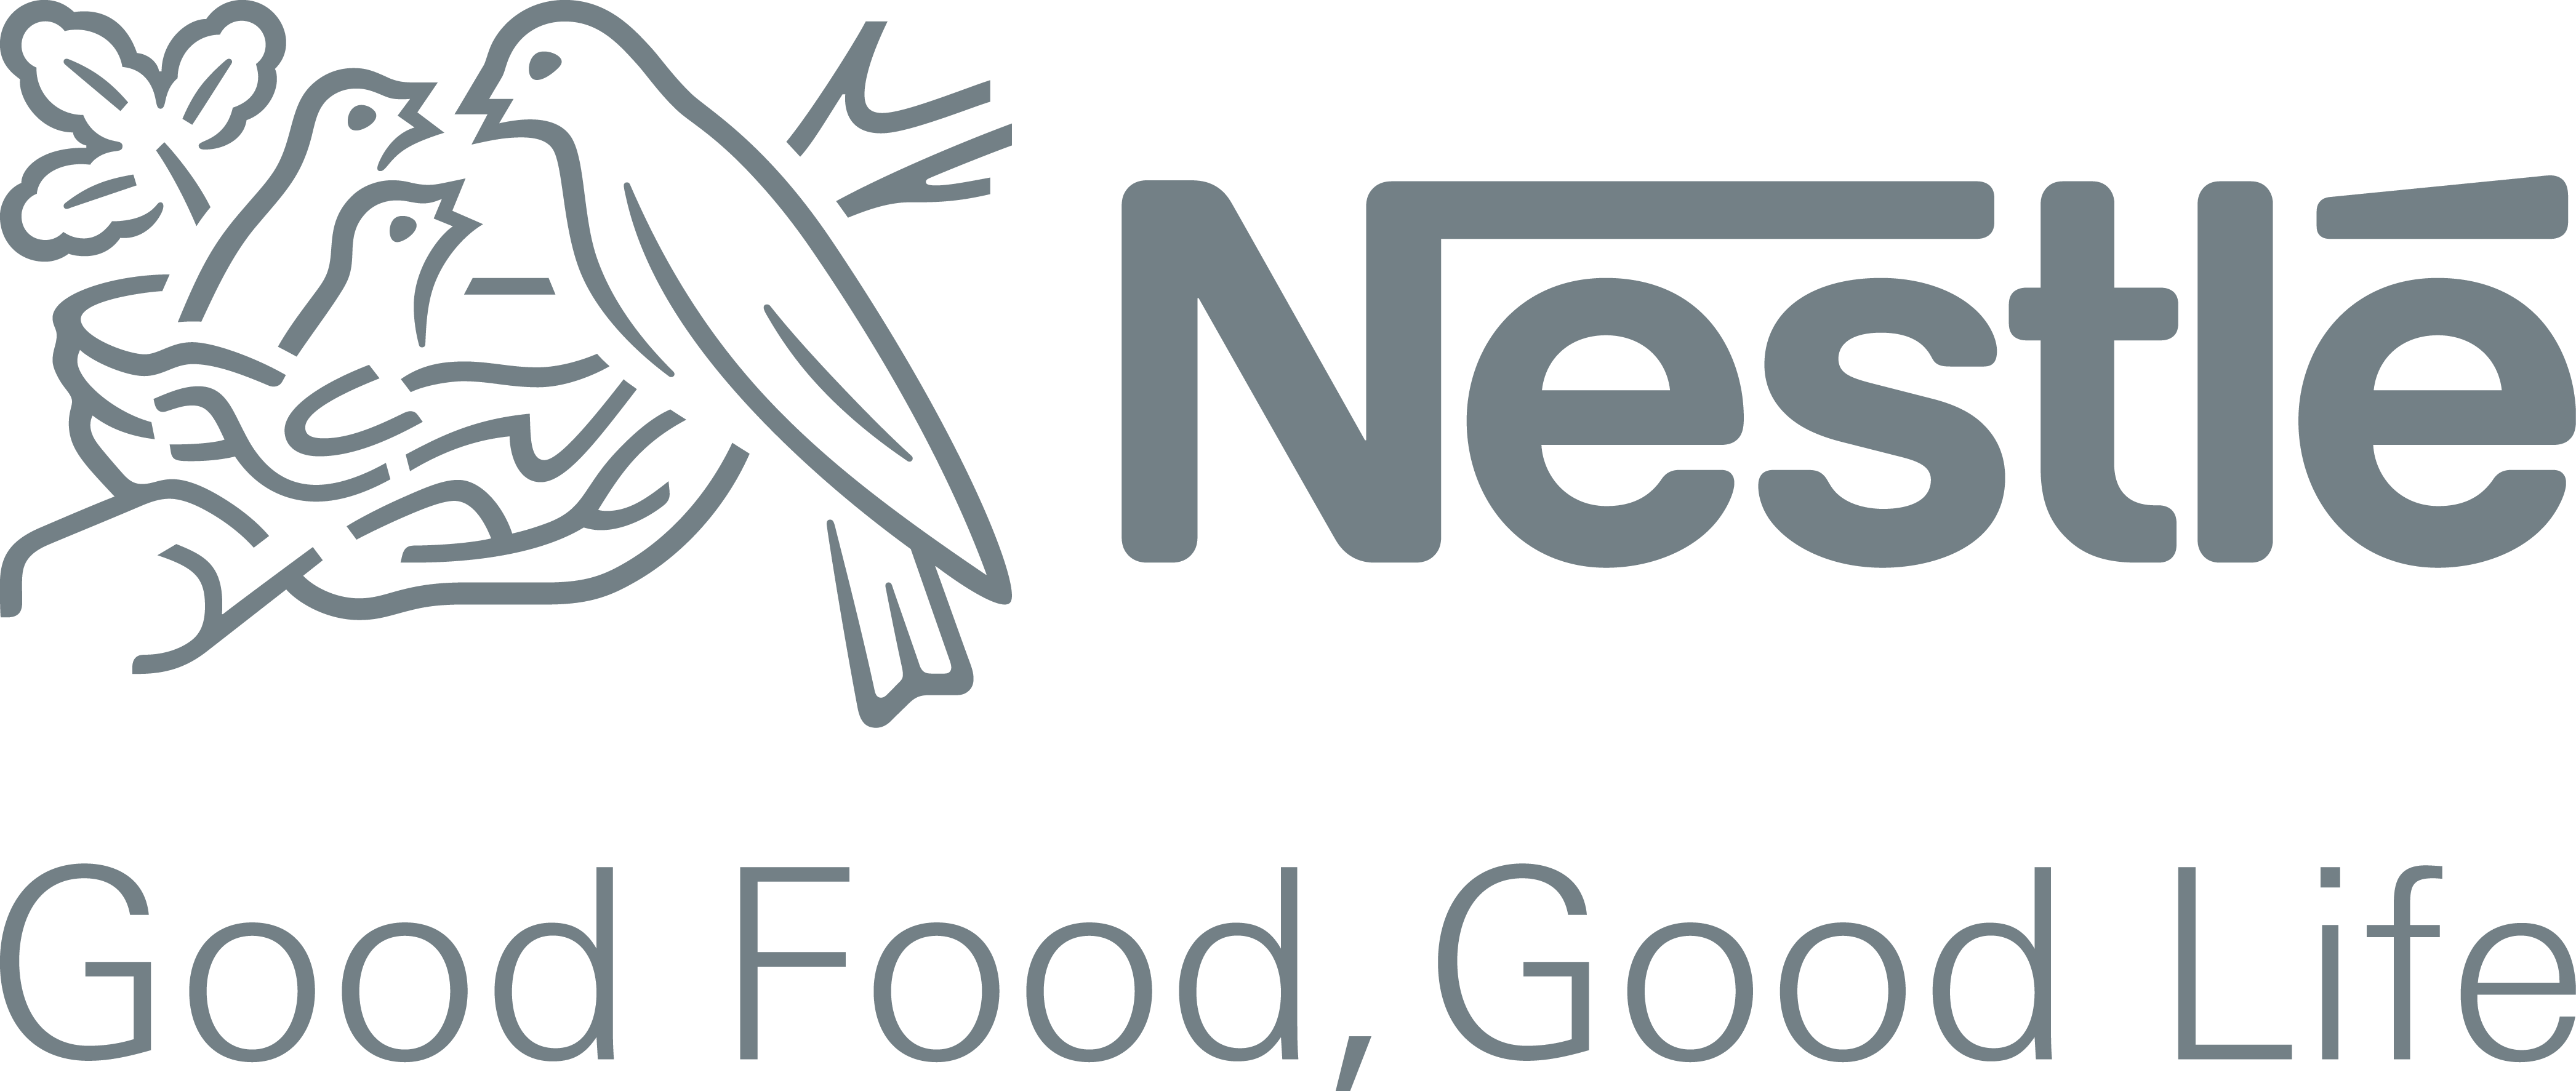 Neues Nestle Logo transparentes Bild